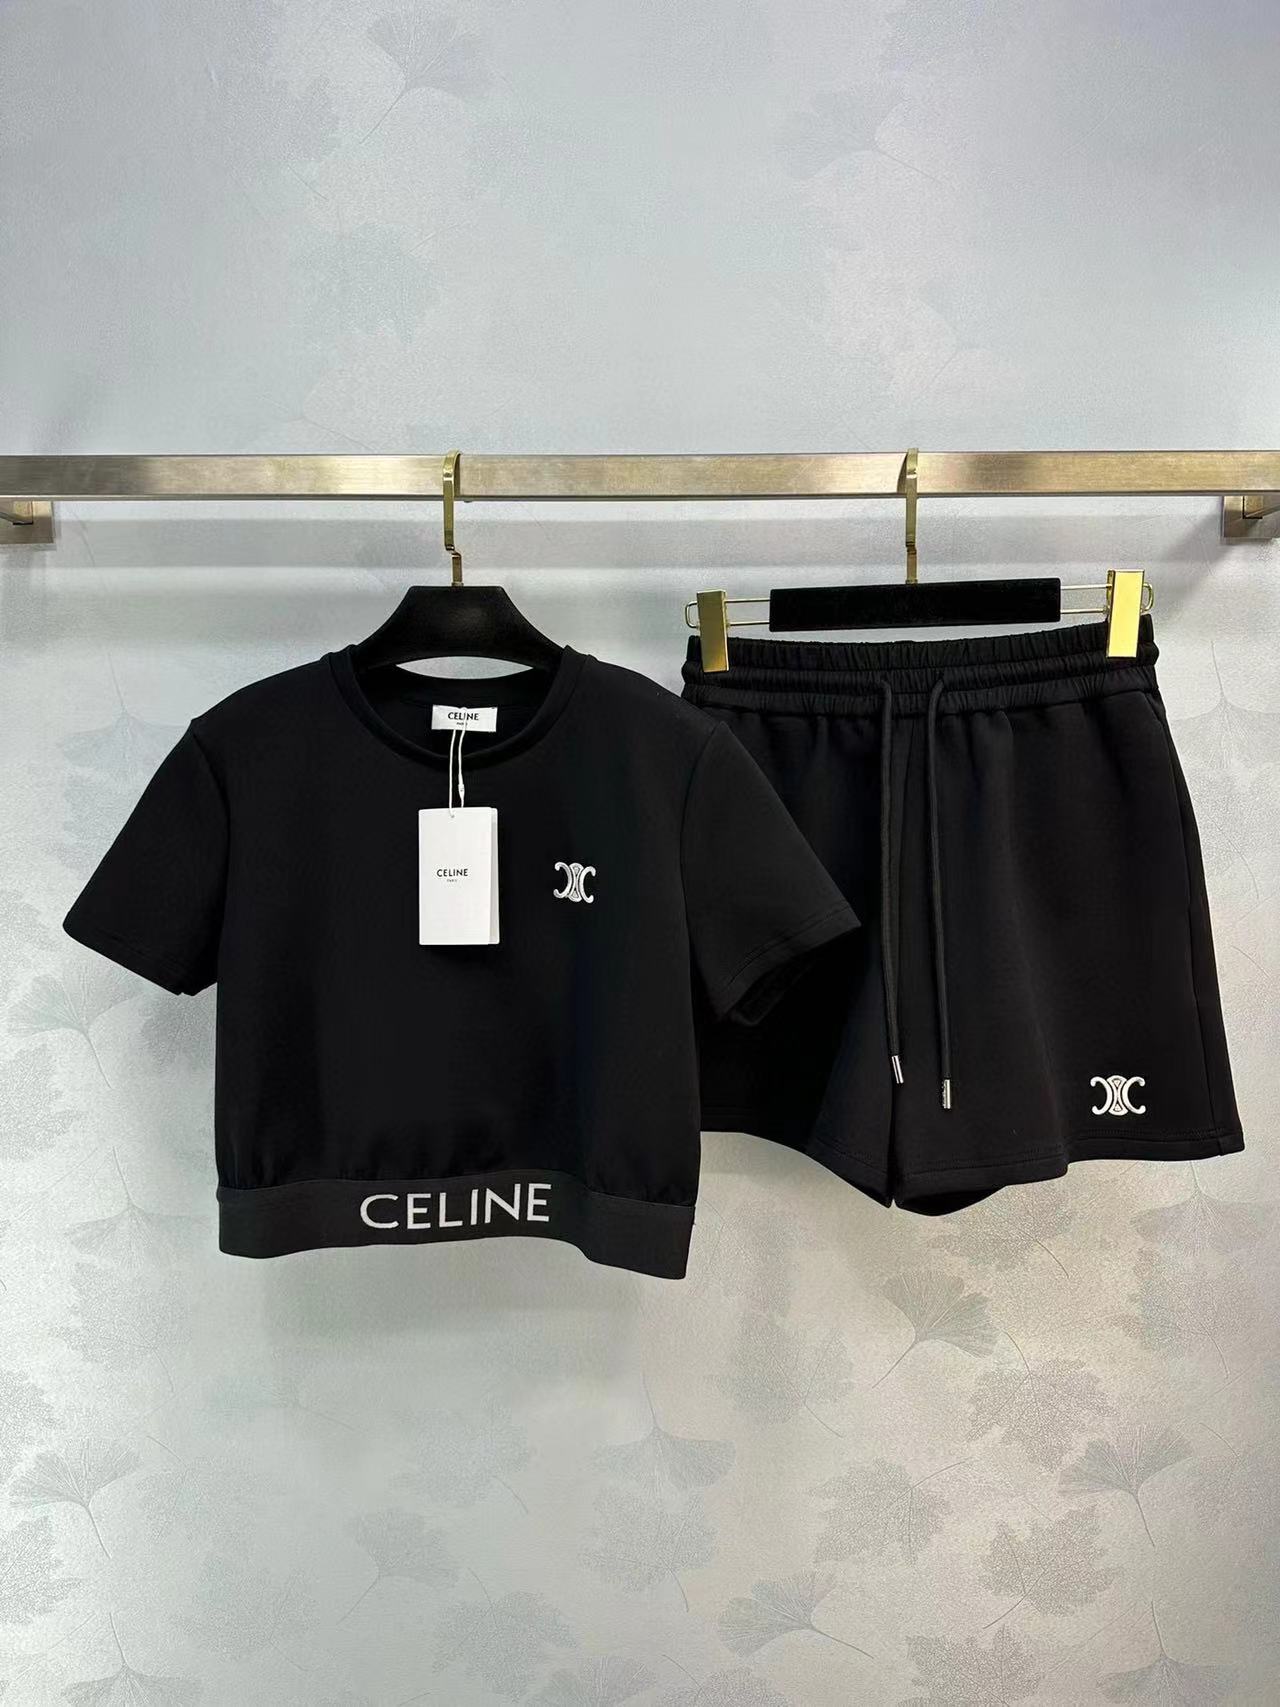 CEL1NE 刺繍ロゴカジュアル半袖スーツ【50％割引+送料無料】